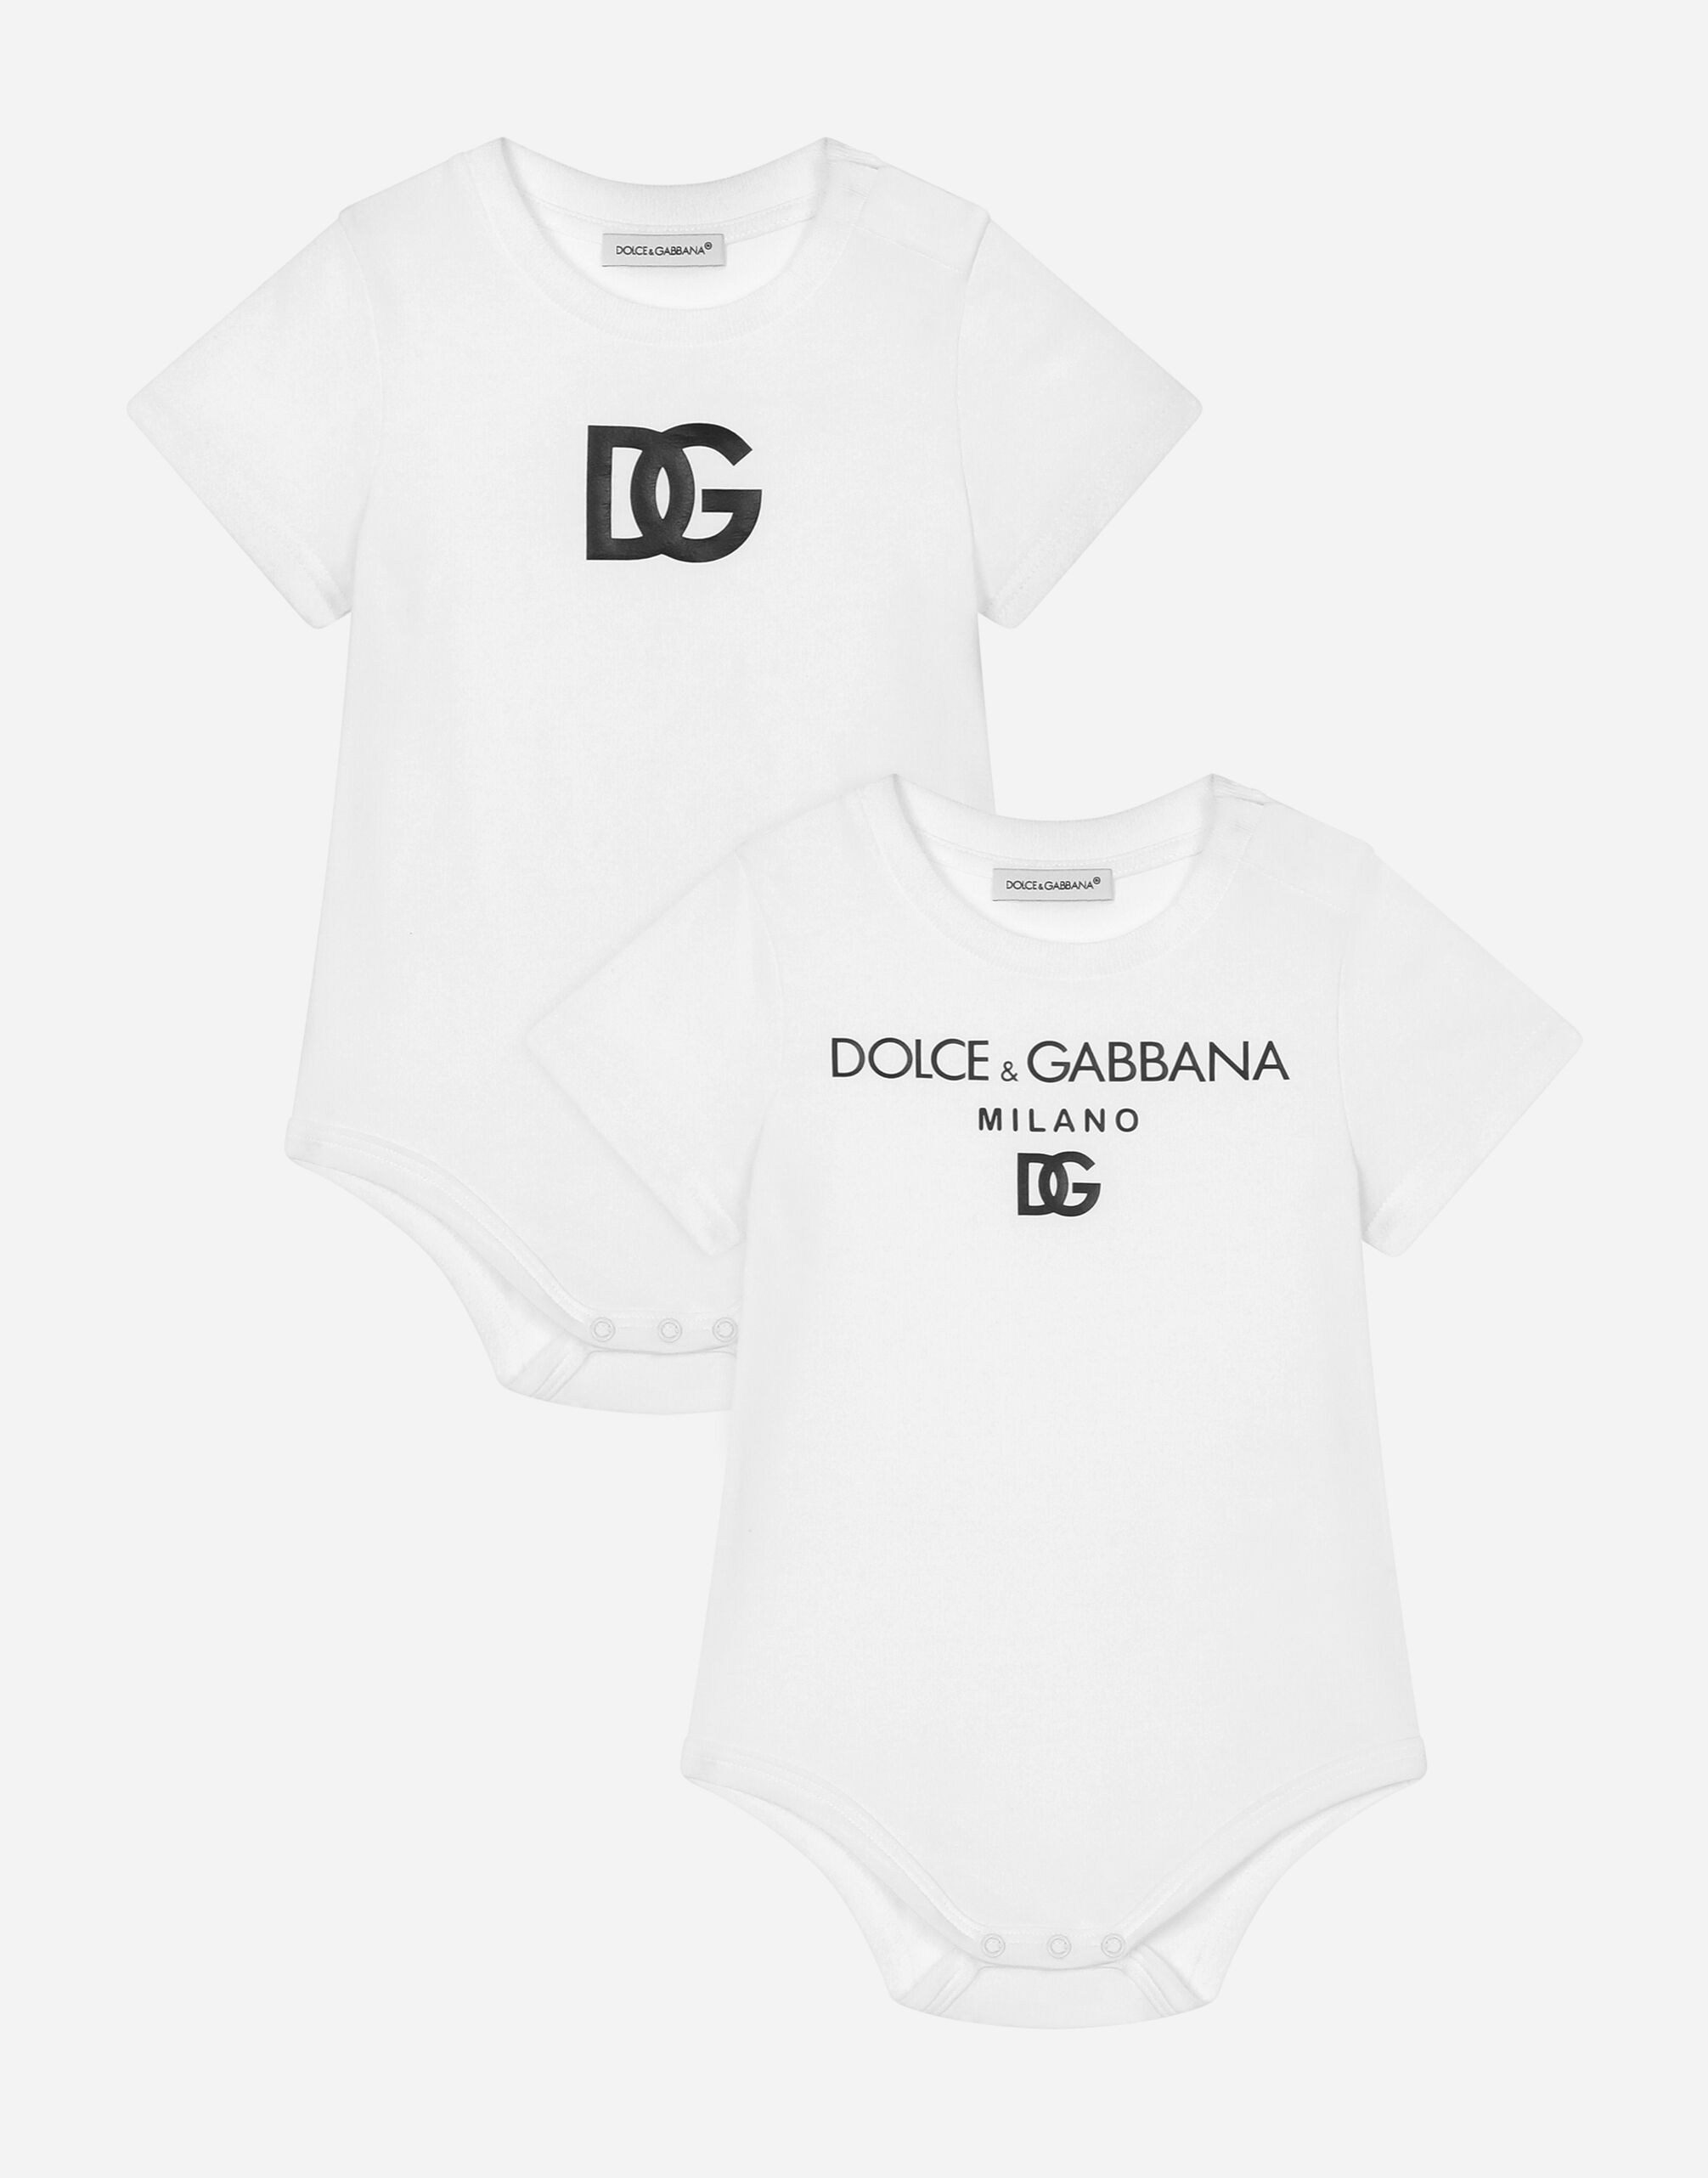 DolceGabbanaSpa 2-babygrow gift set in logo-print jersey Azure L1JB6DISMFZ